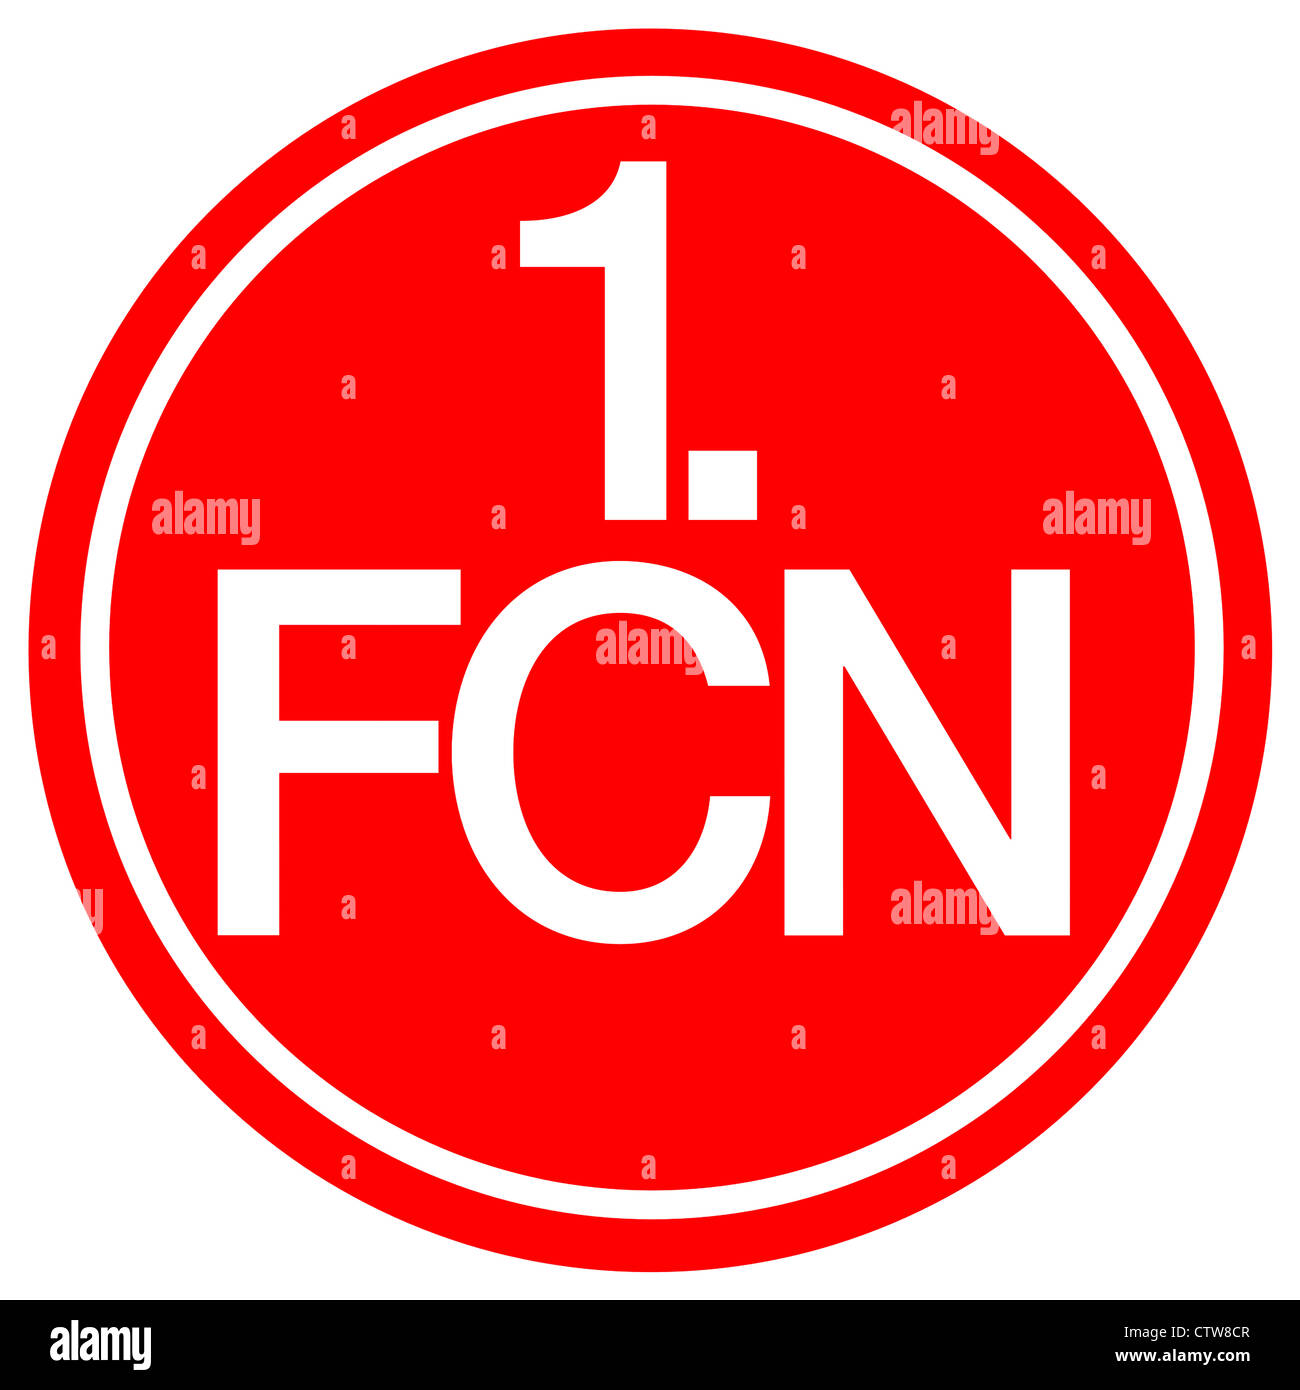 Logo de l'équipe allemande de football 1. FC Nuremberg. Banque D'Images